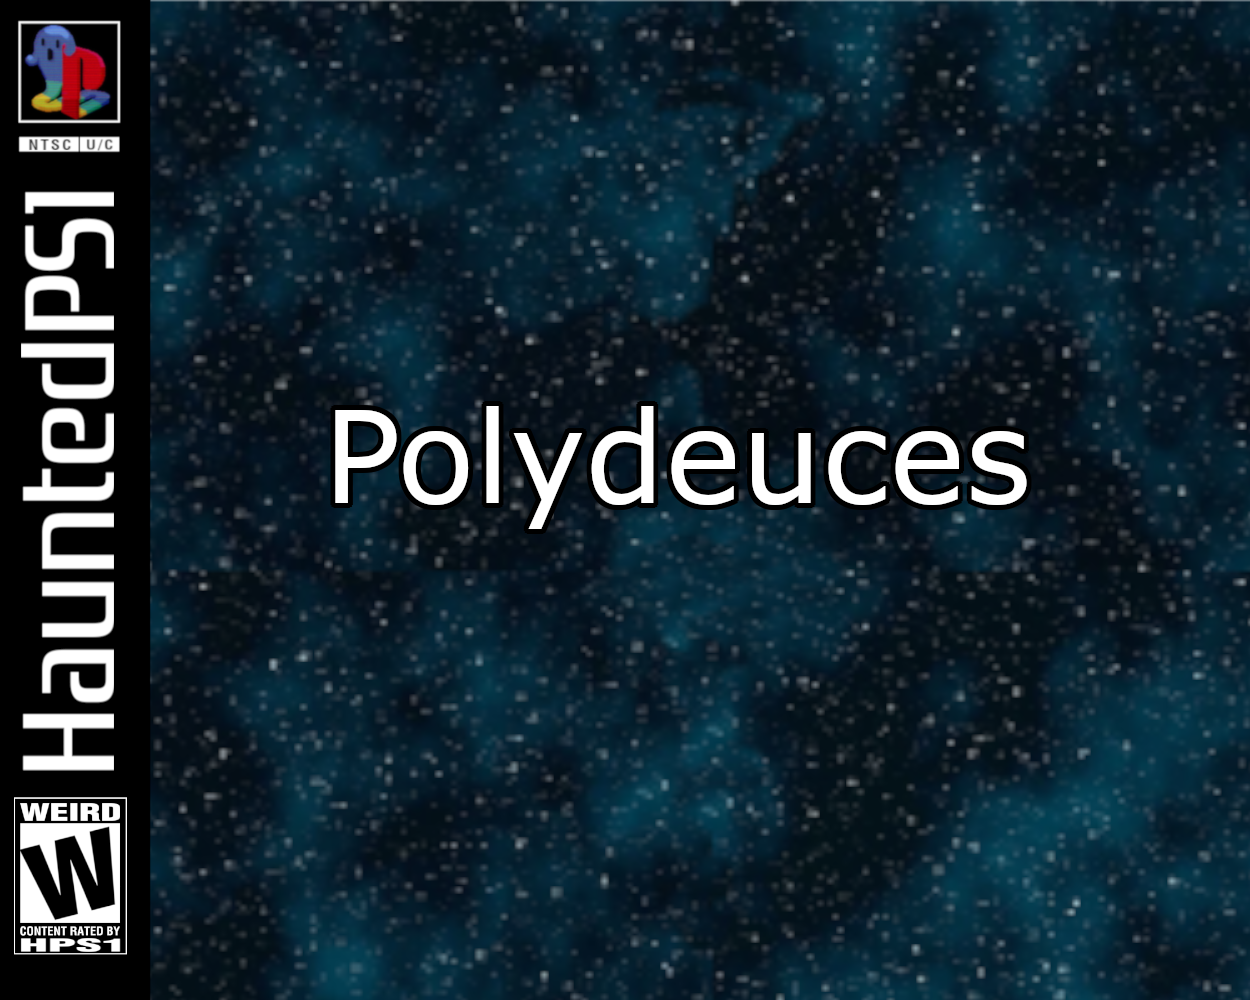 Polydeuces